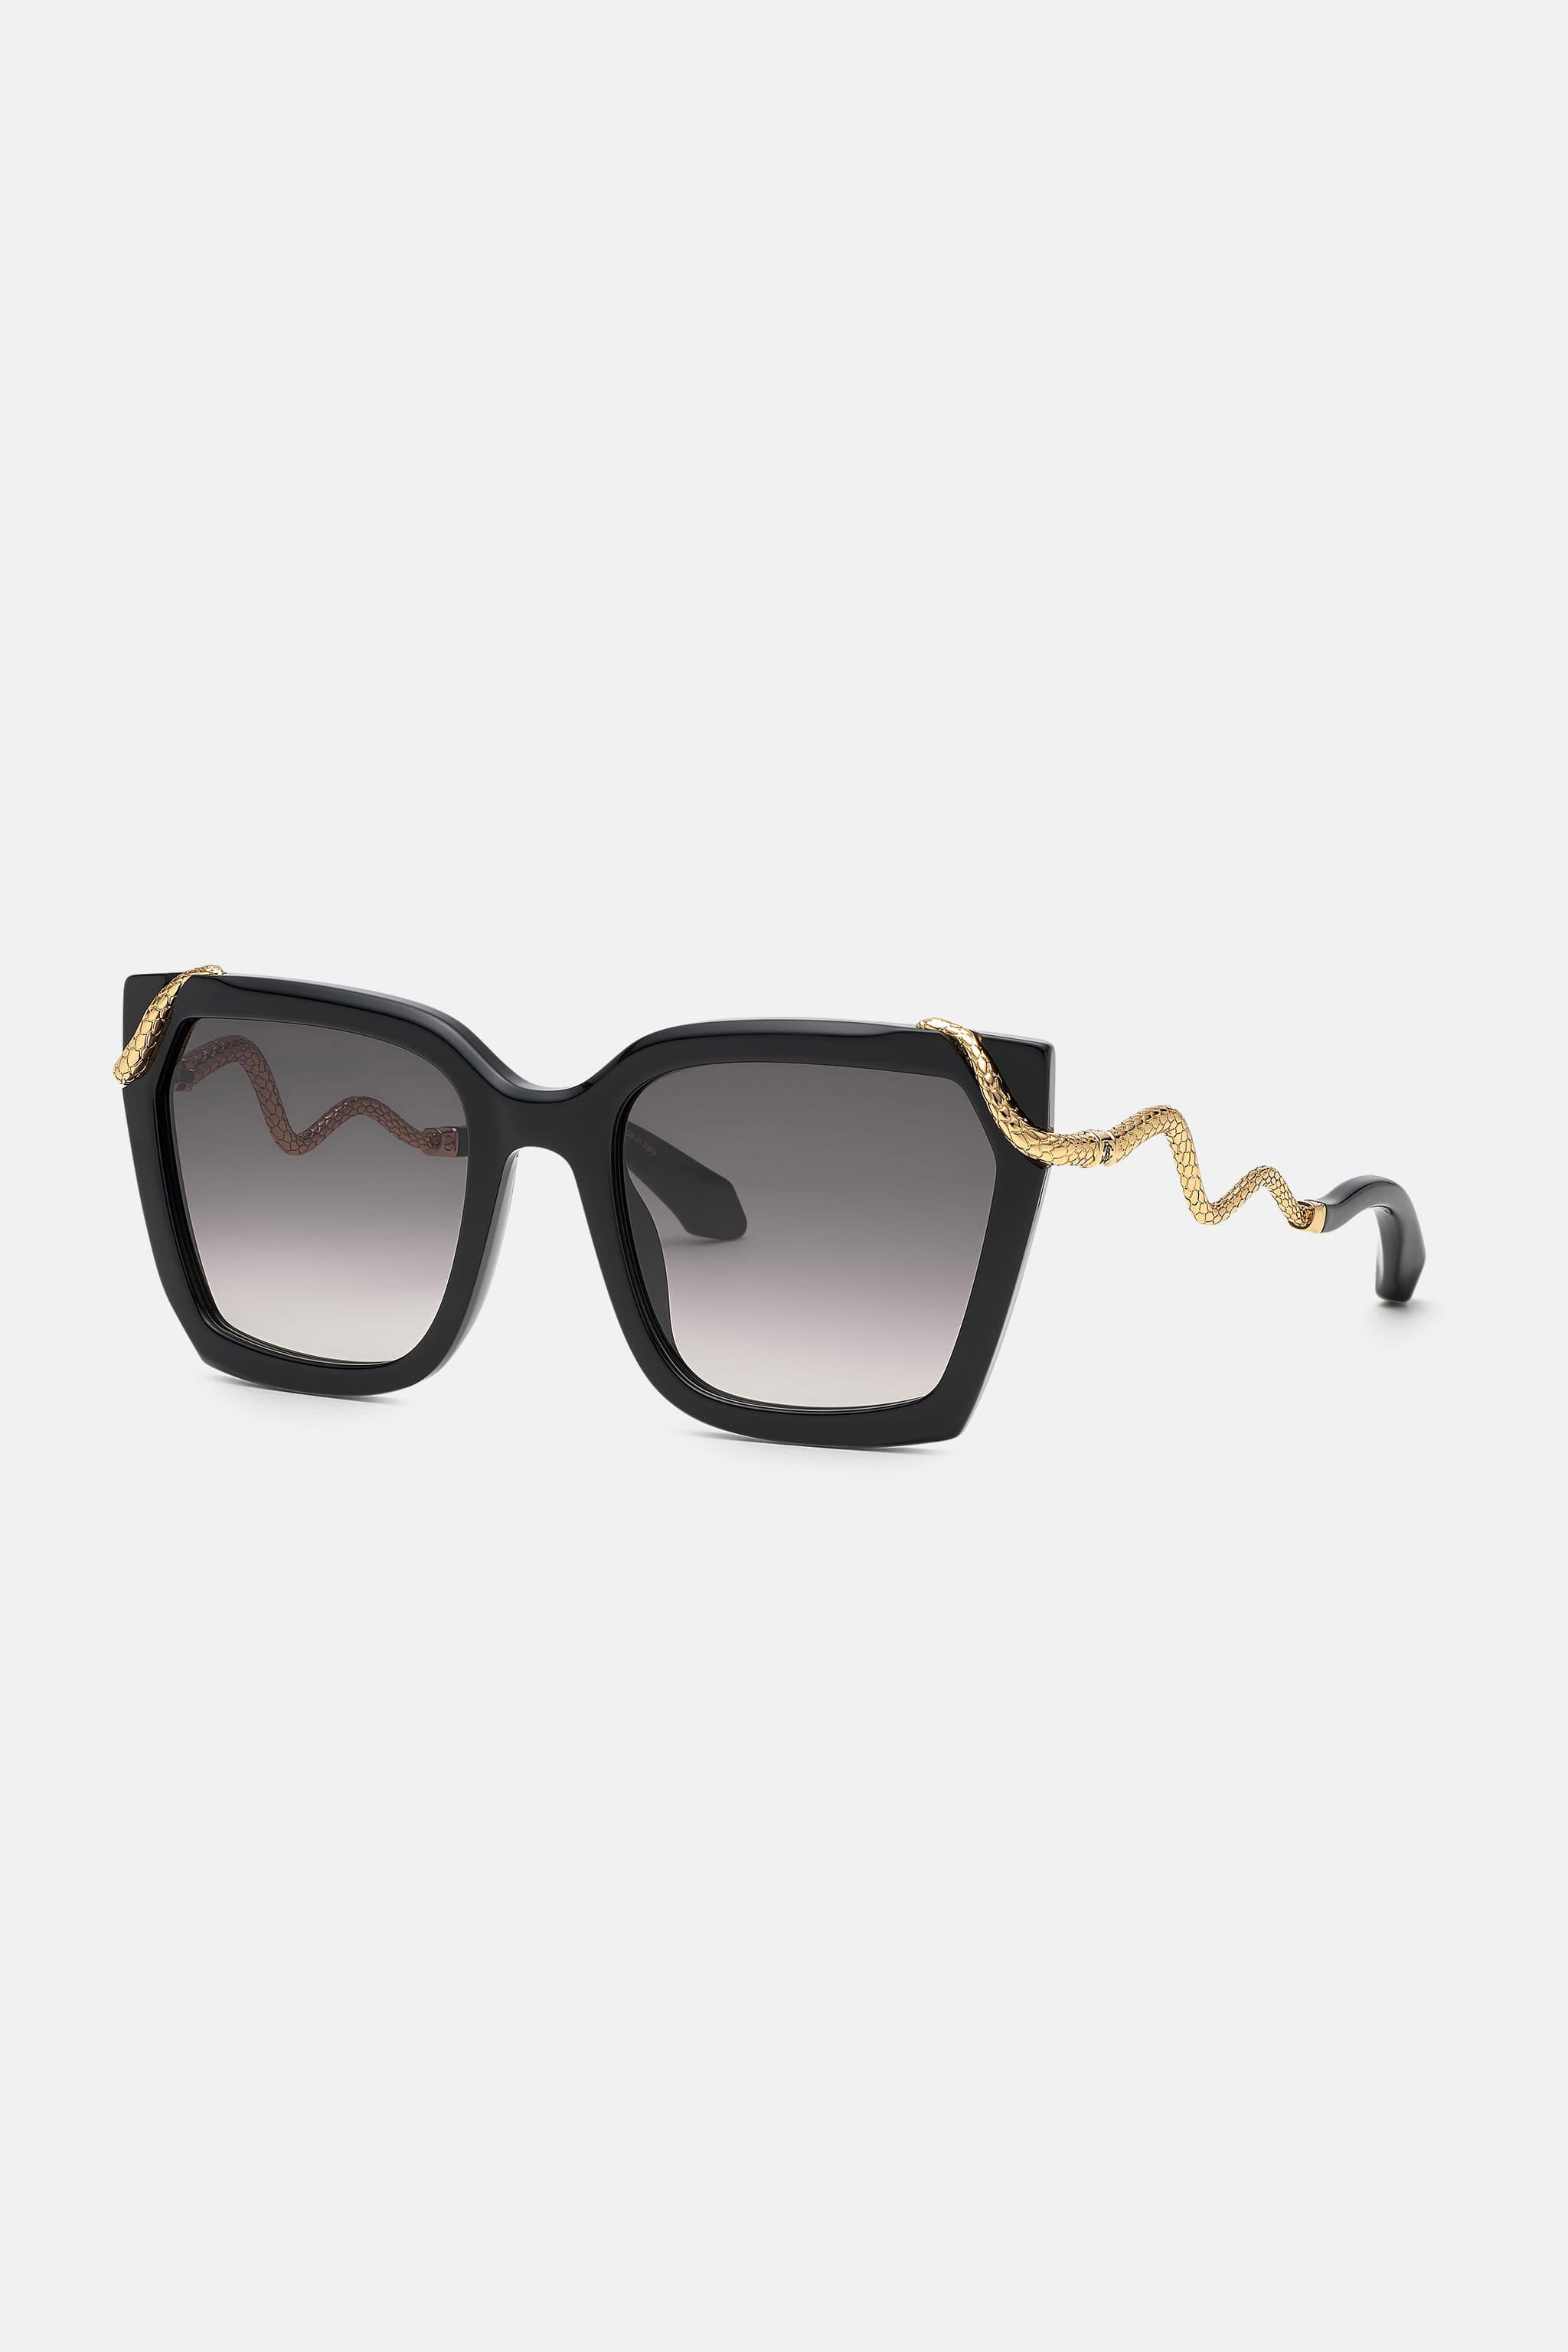 Sunglasses Roberto Cavalli - Snake Collection | | Women | Roberto Cavalli US